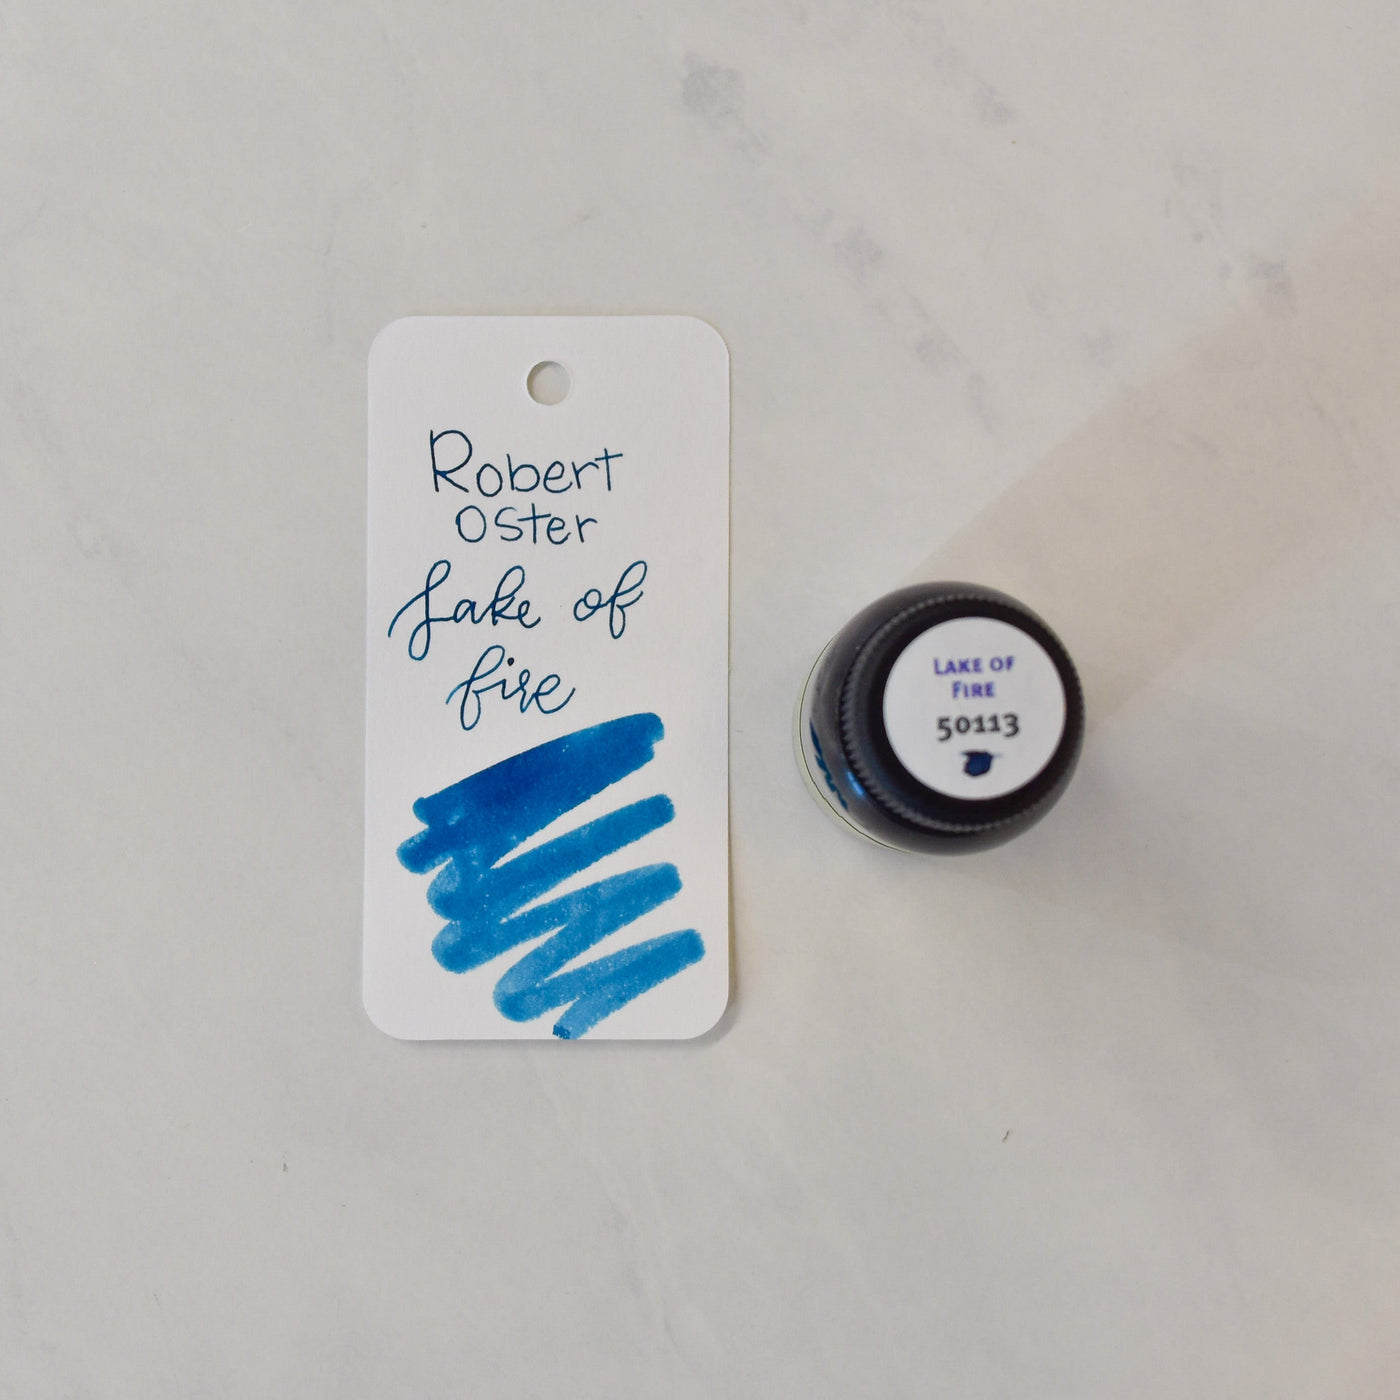 Robert Oster Lake of Fire Ink blue glass bottle